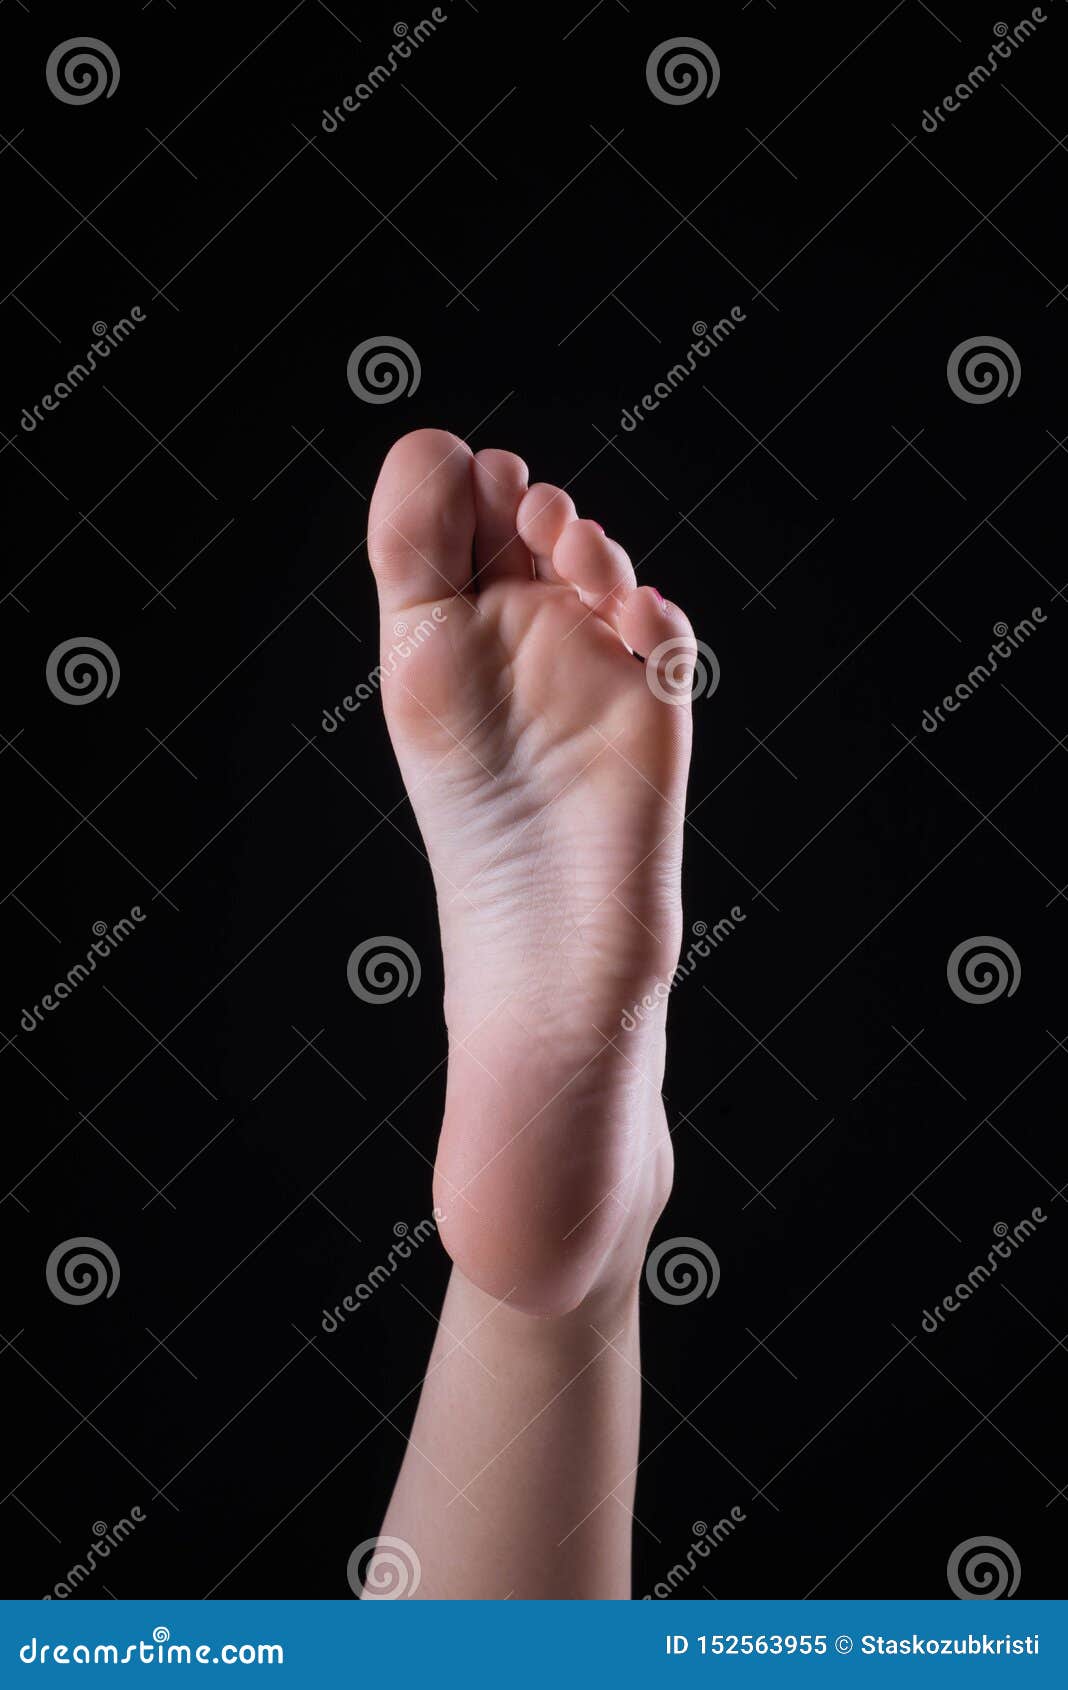 Young Girl Feet